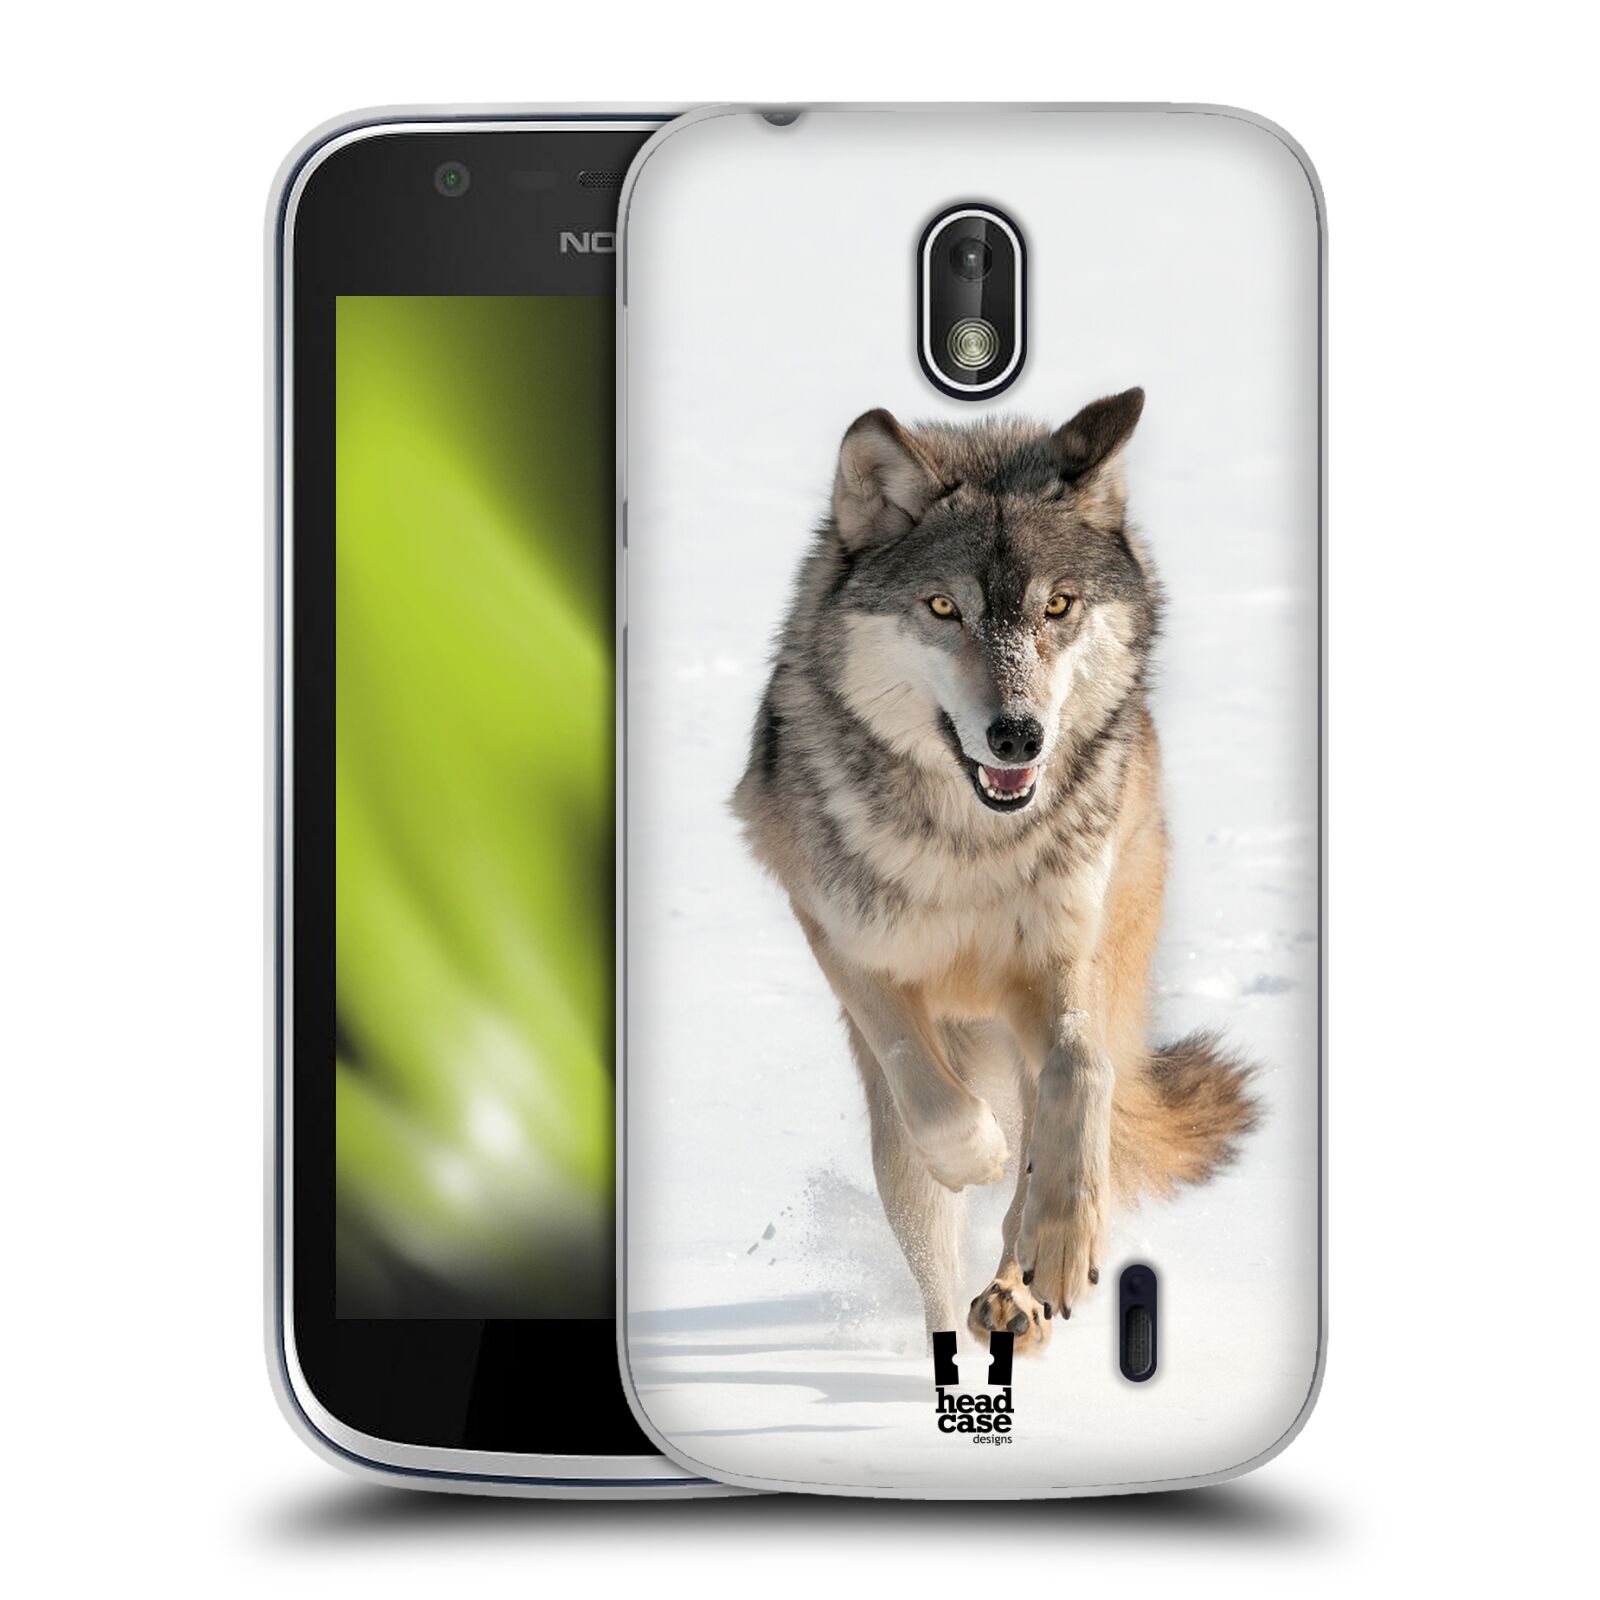 HEAD CASE silikonový obal na mobil Nokia 1 vzor Divočina, Divoký život a zvířata foto BĚŽÍCÍ VLK